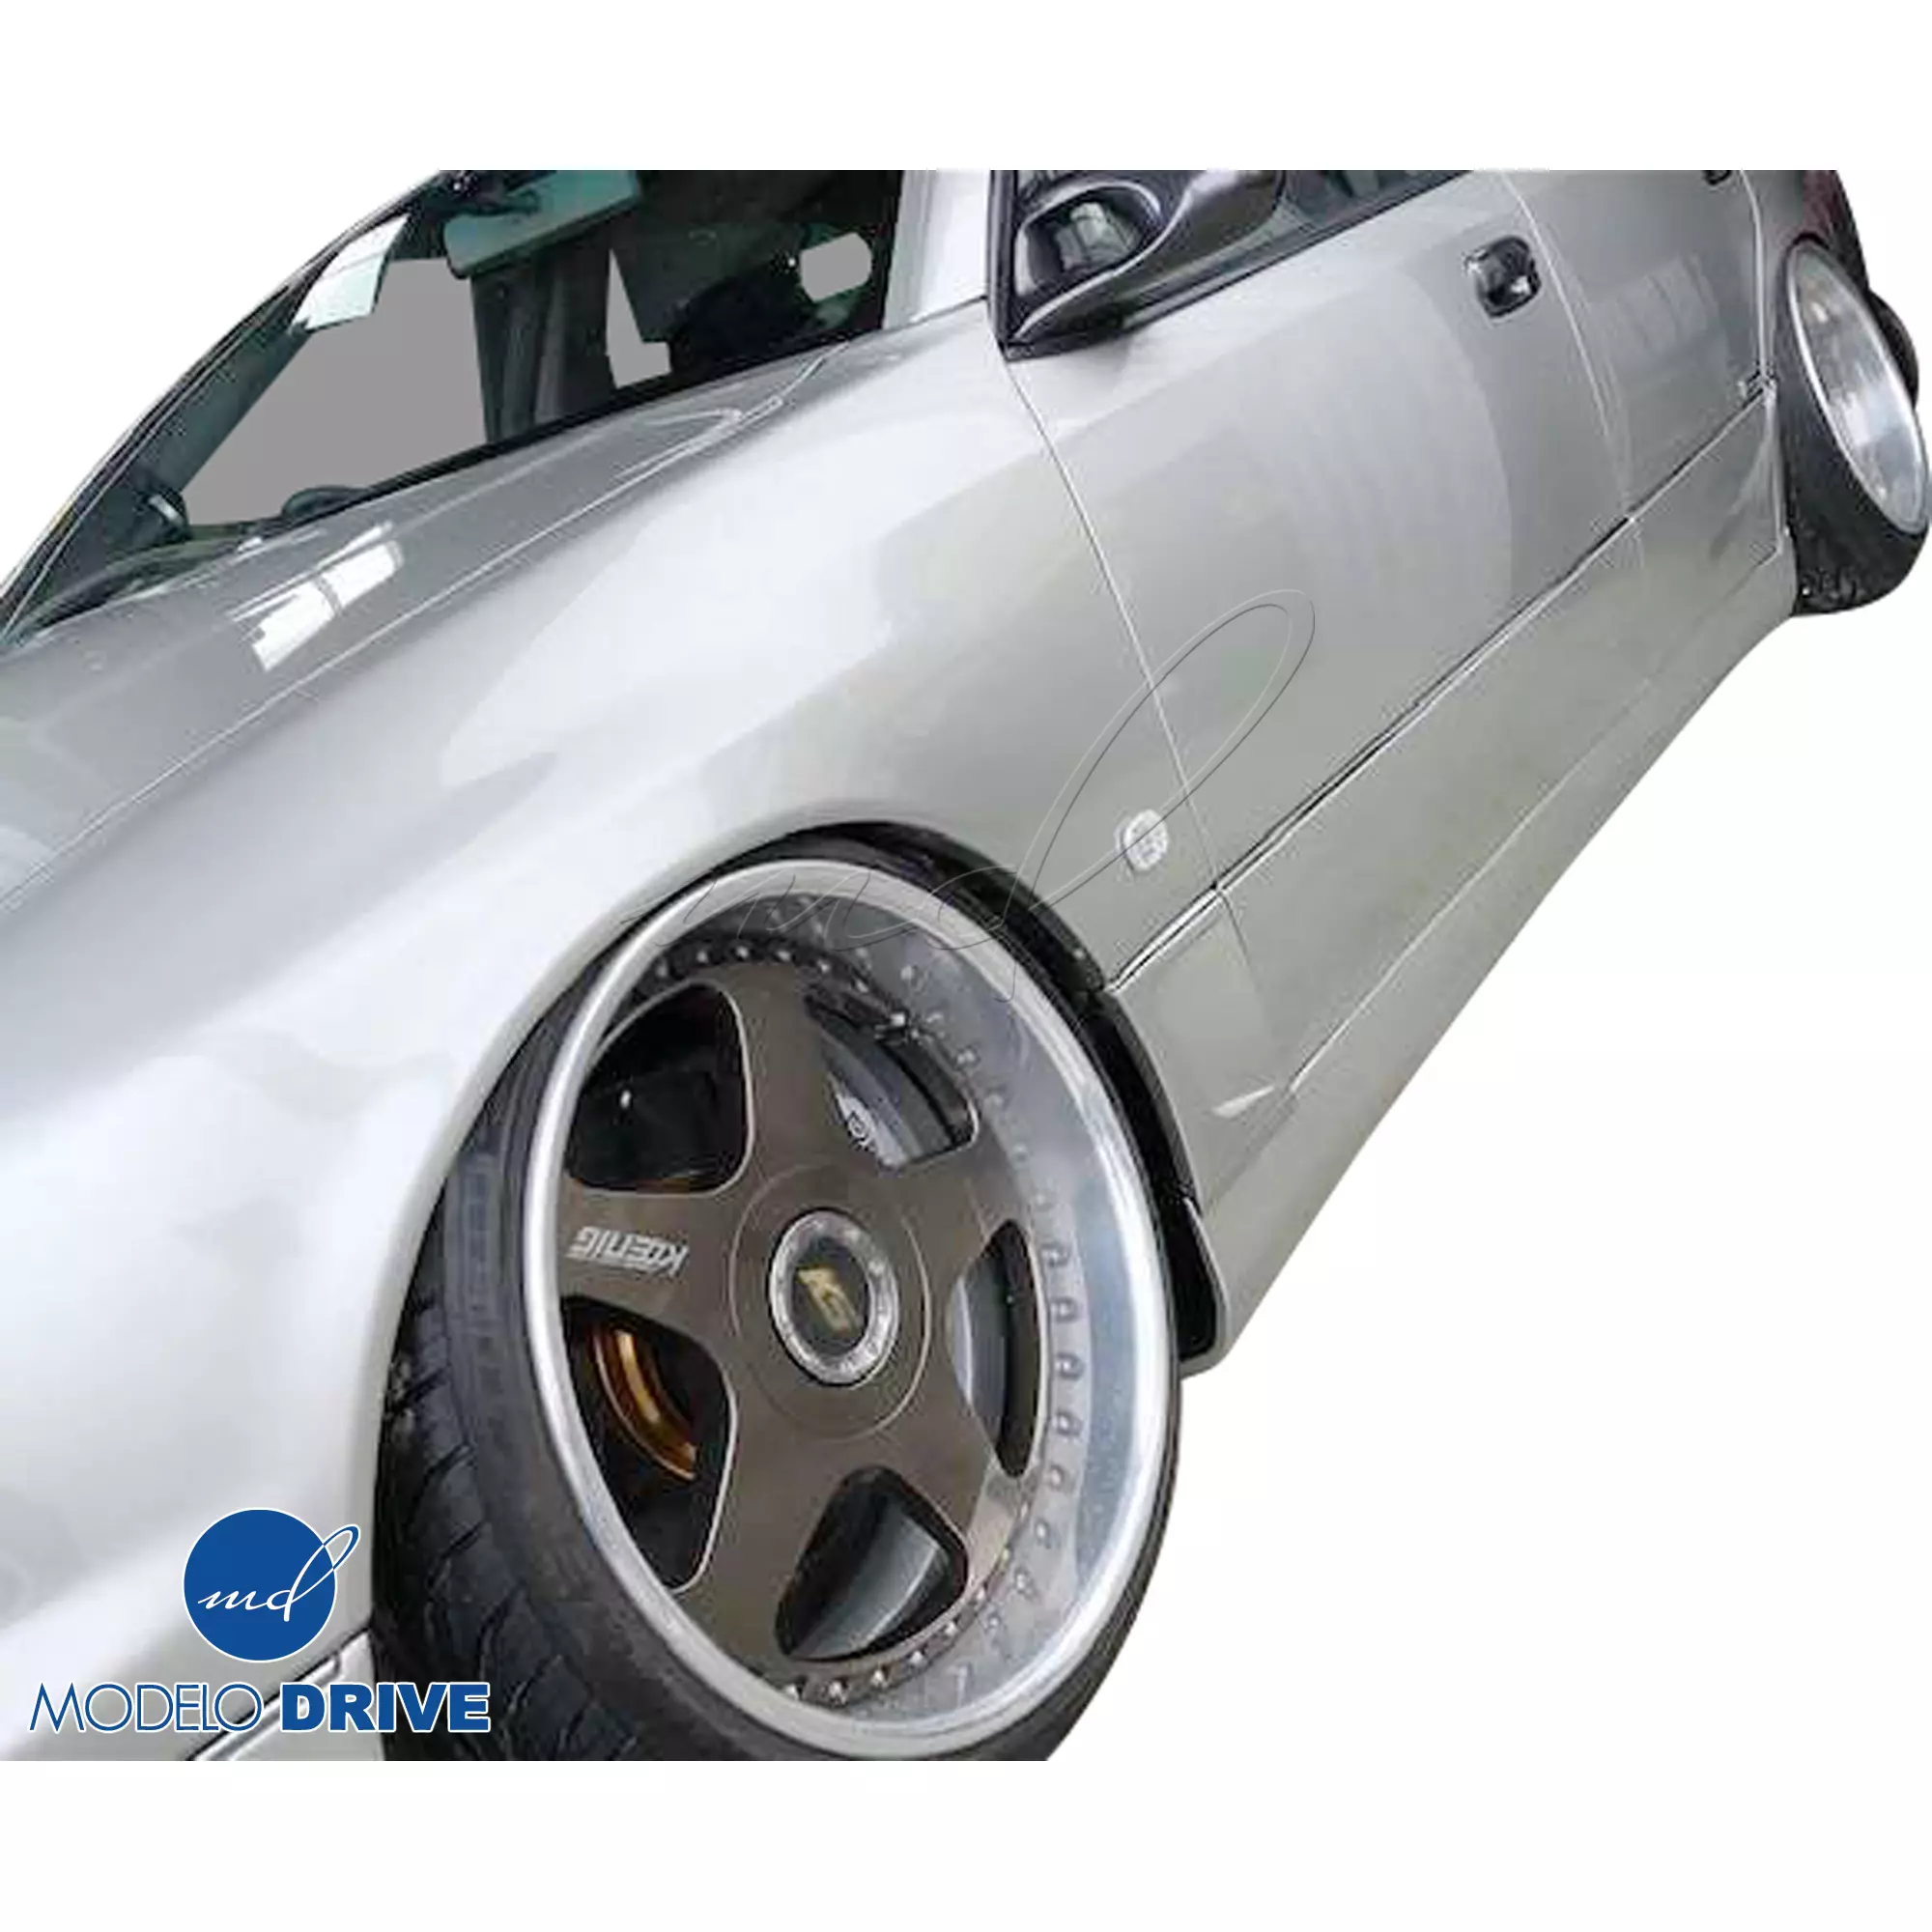 ModeloDrive FRP JUNT Body Kit 4pc > Lexus GS Series GS400 GS300 1998-2005 - Image 71